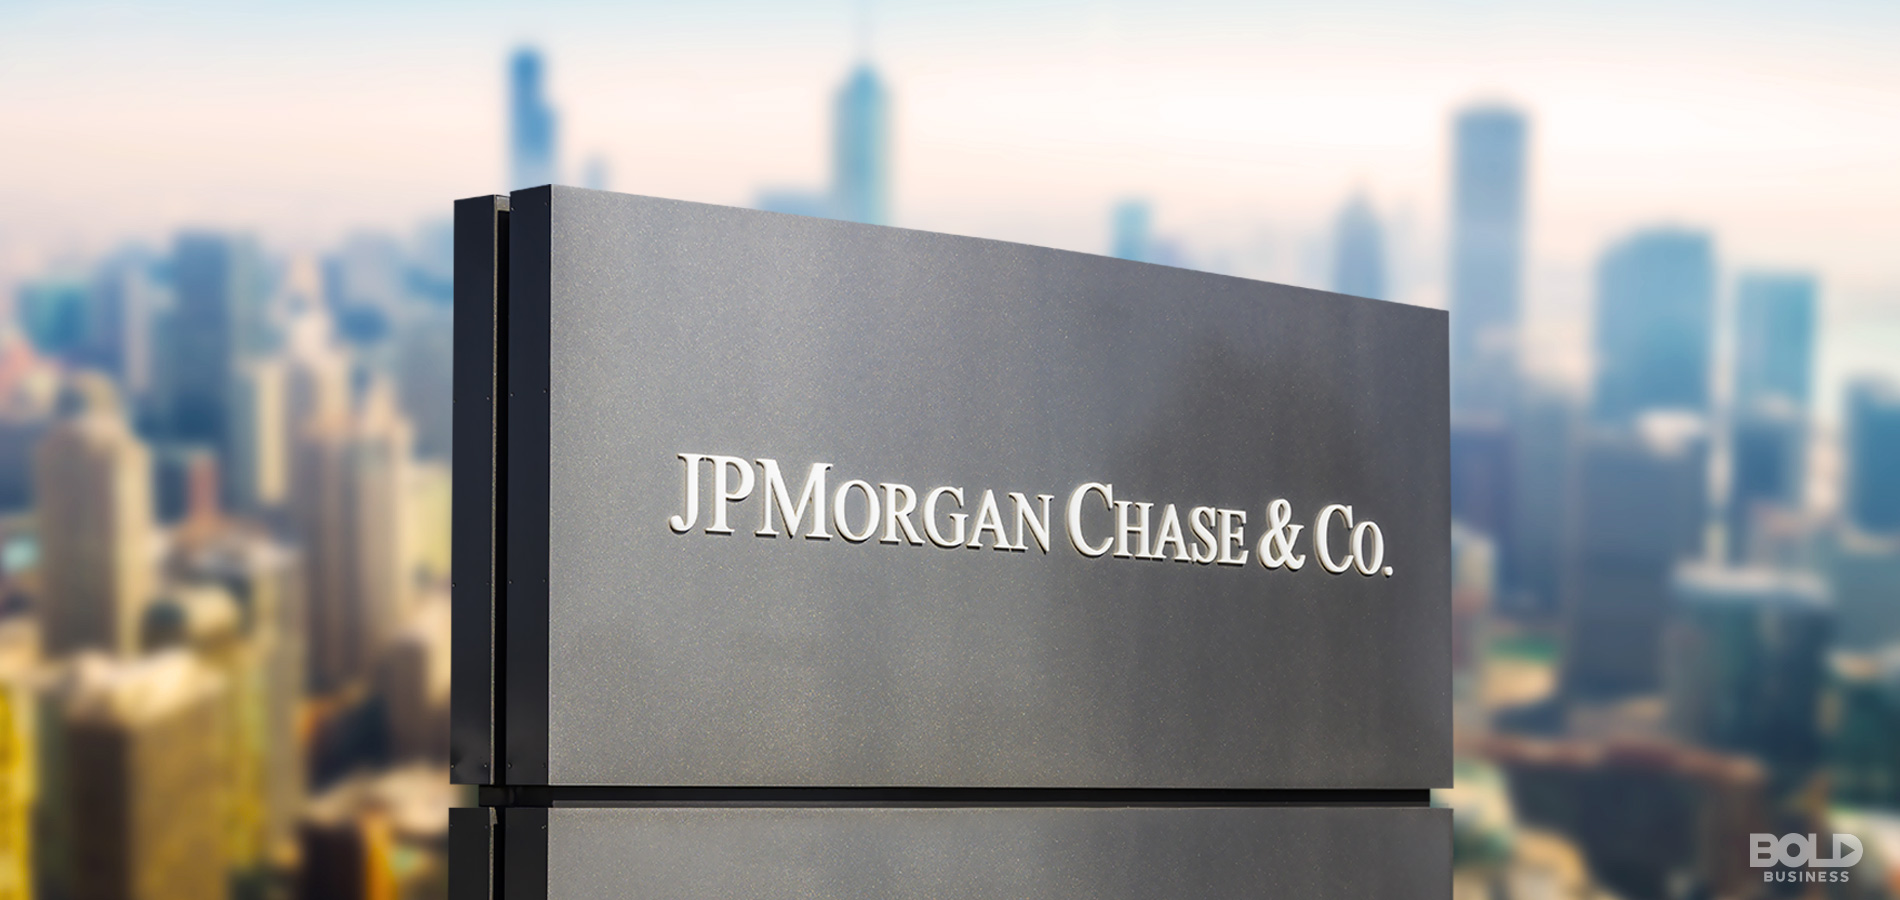 JP Morgan Chase & Co. stock